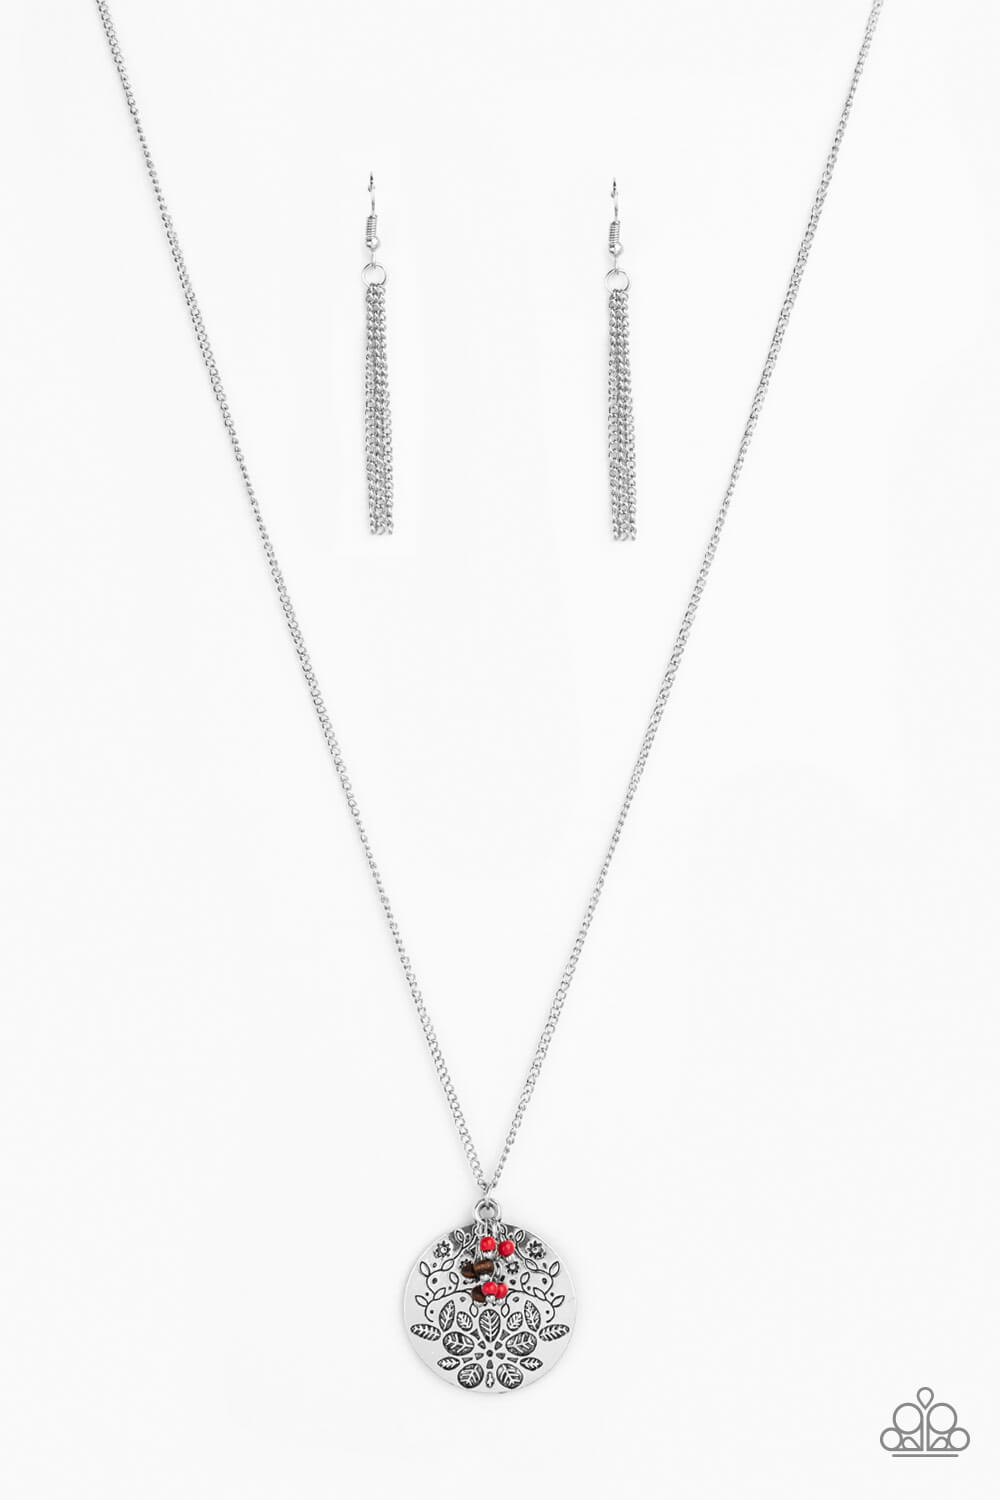 Desert Abundance - Red Stone Bead Necklace Set - Princess Glam Shop